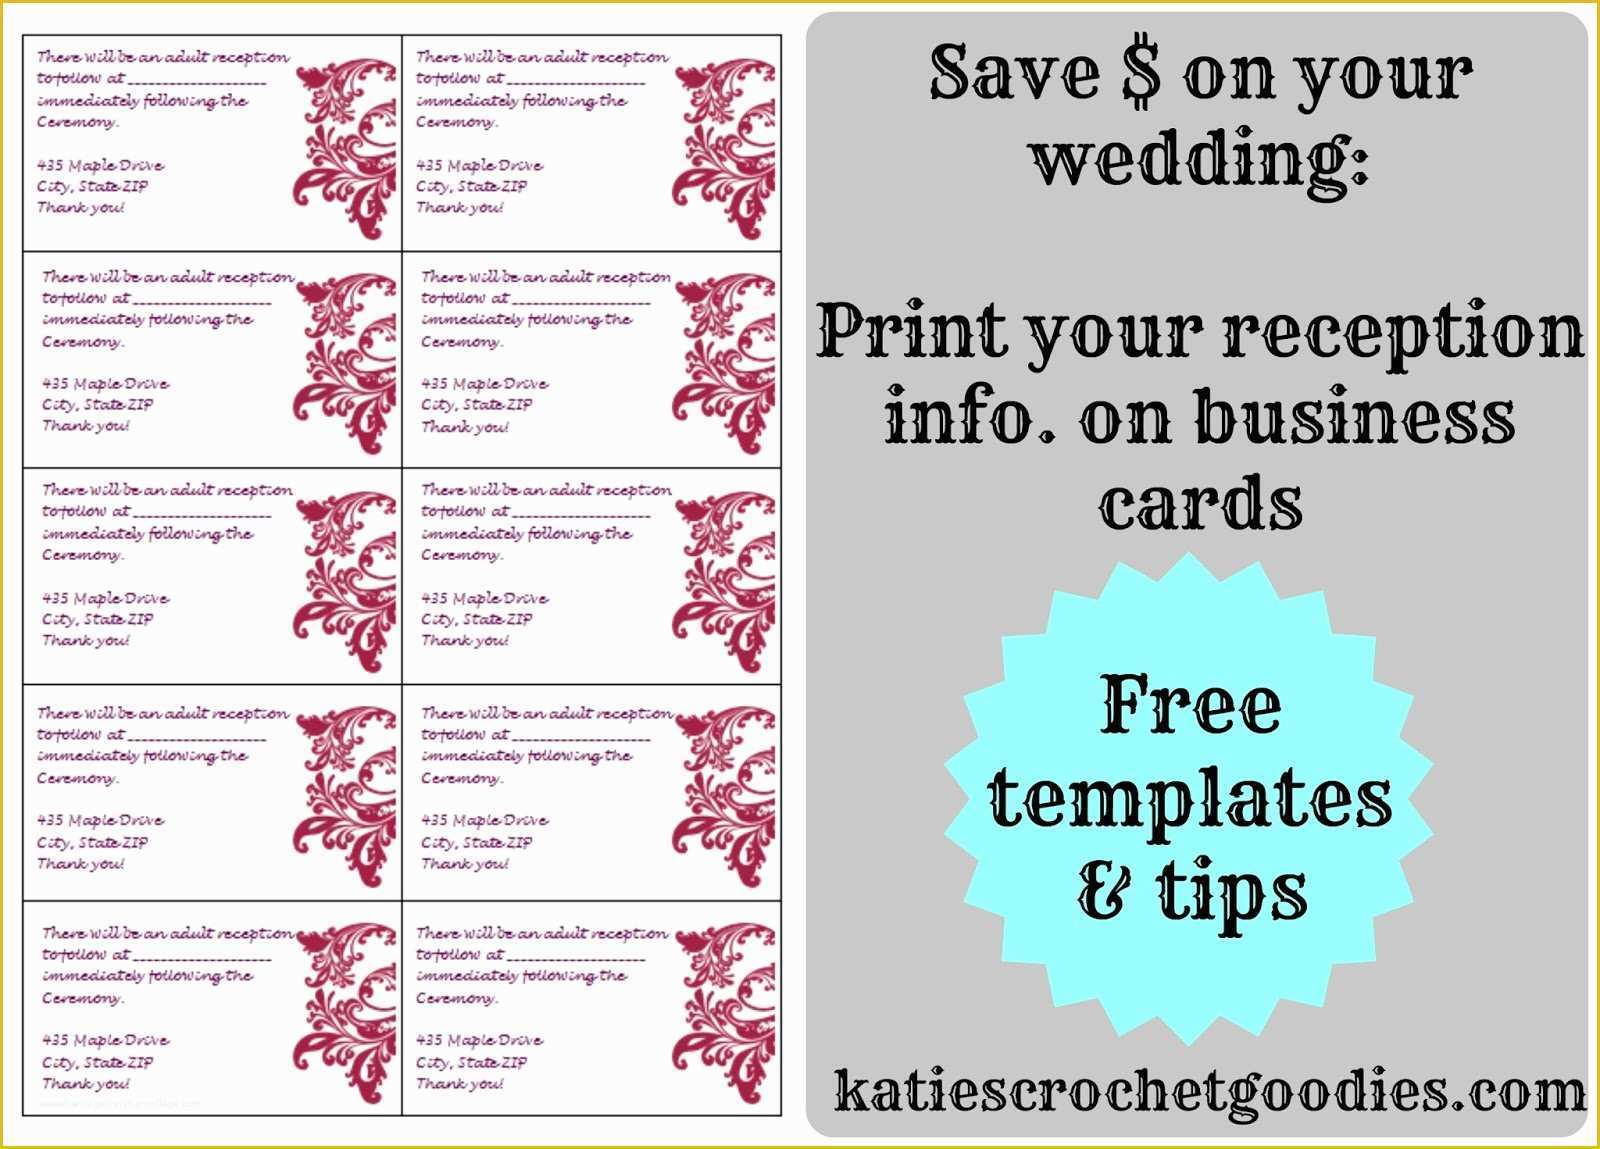 Free Wedding Reception Templates Of Free Wedding Templates Rsvp & Reception Cards Katie S